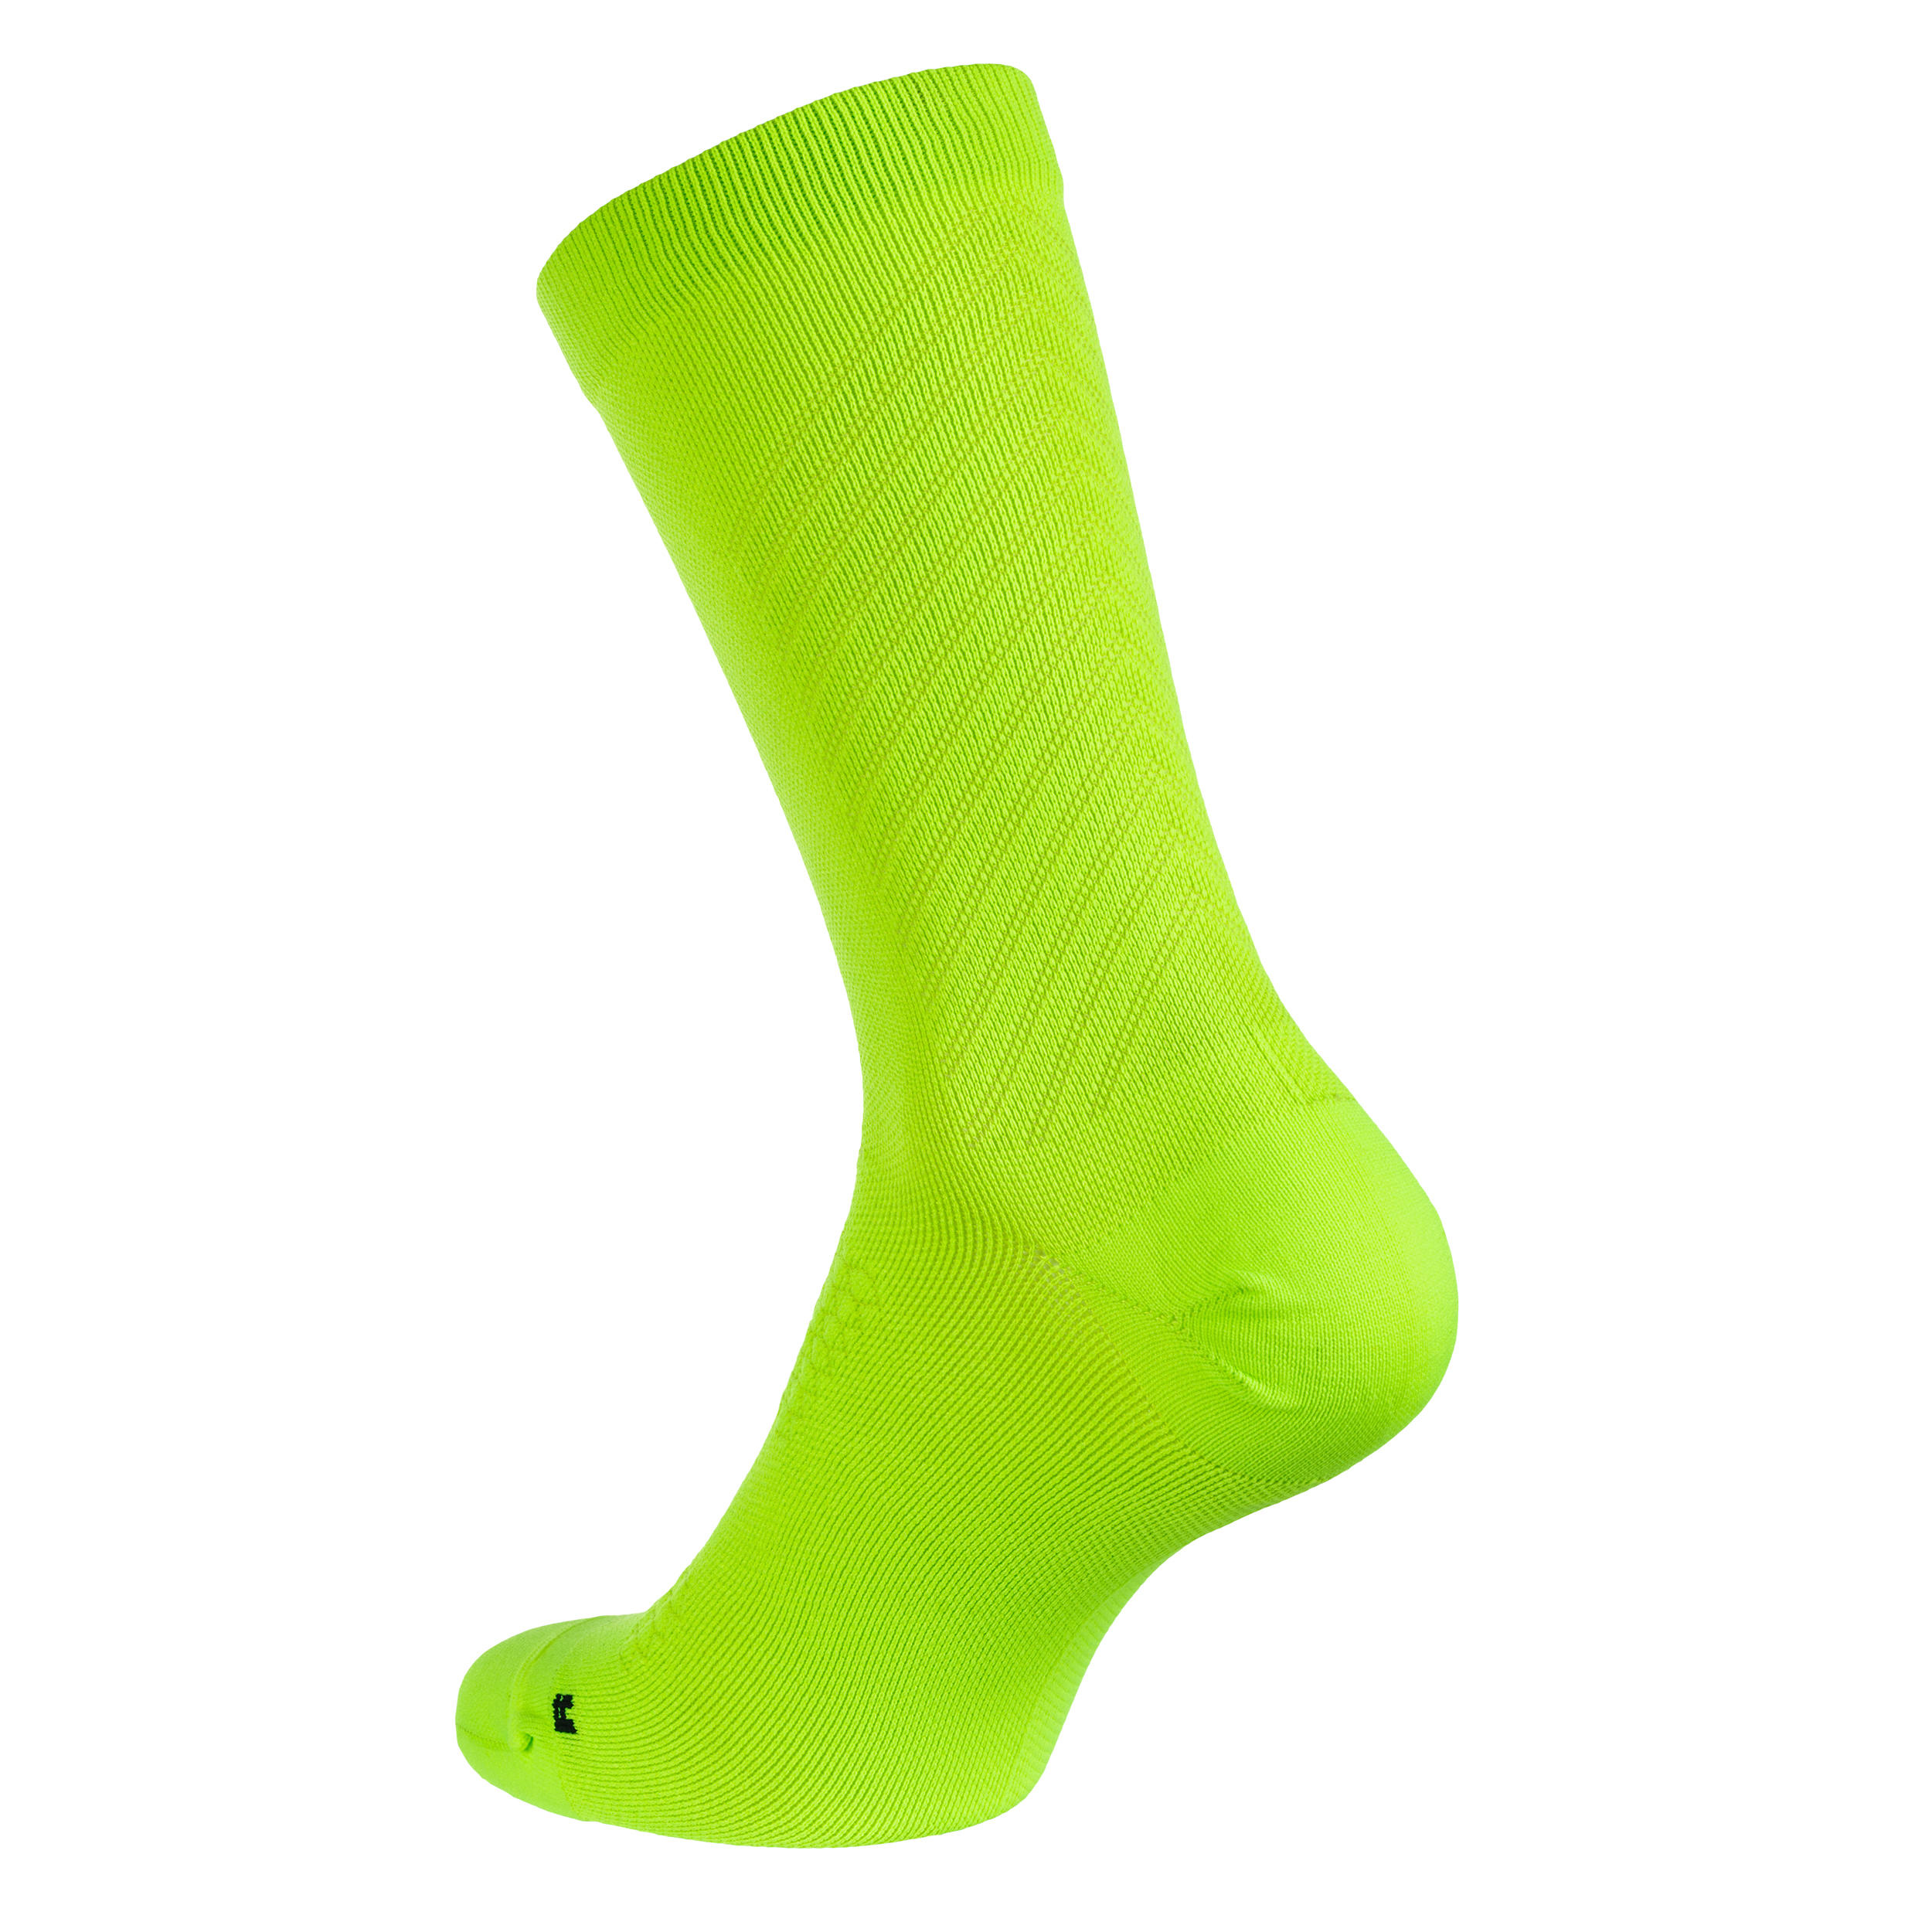 VAN RYSEL 900 Road Sport Cycling Socks - Neon Yellow